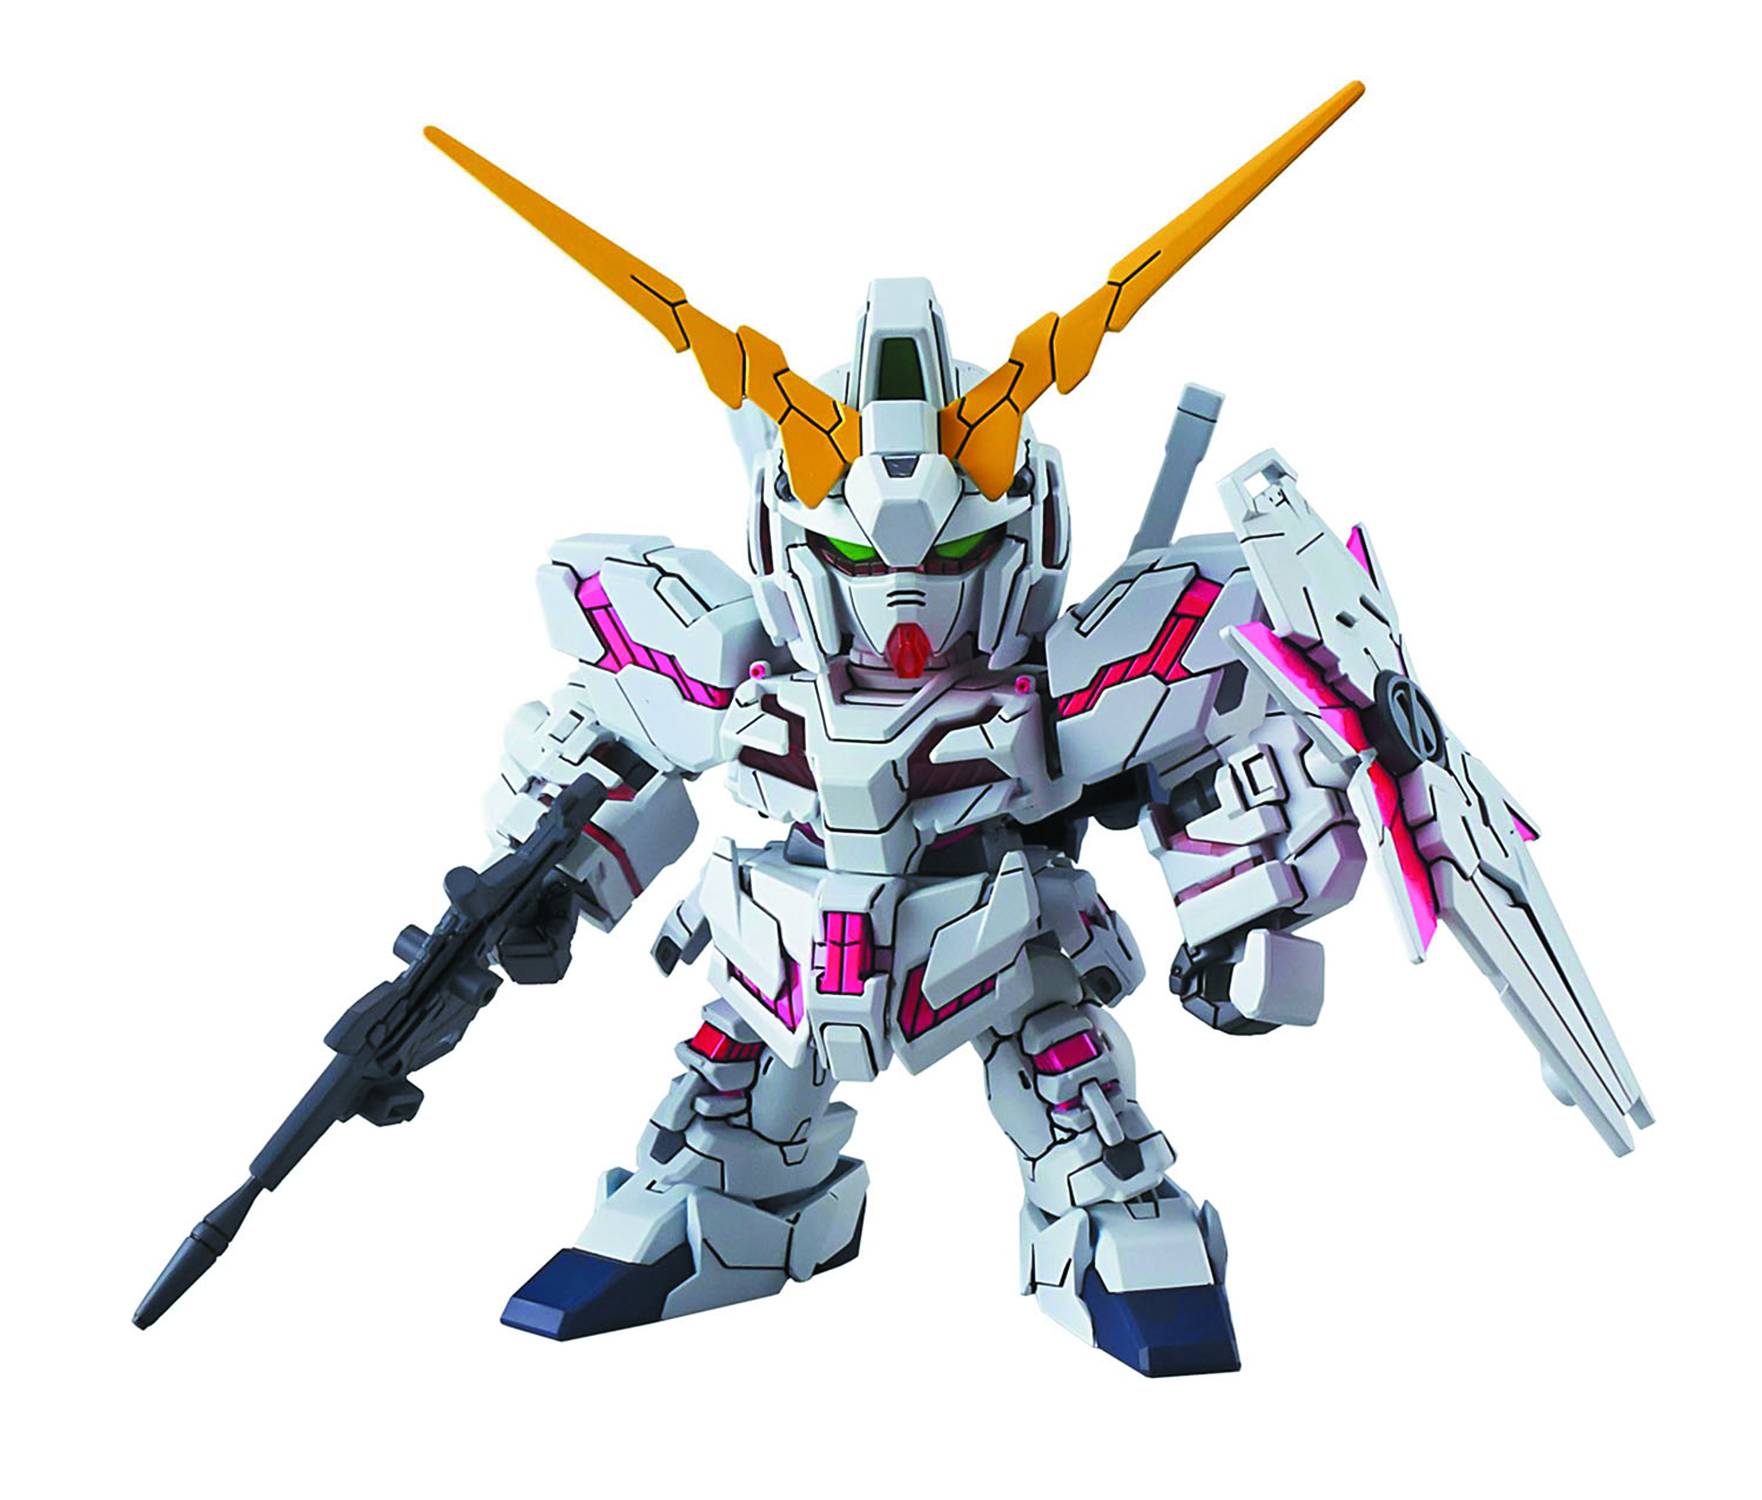 Mini Gundam Toys | vlr.eng.br